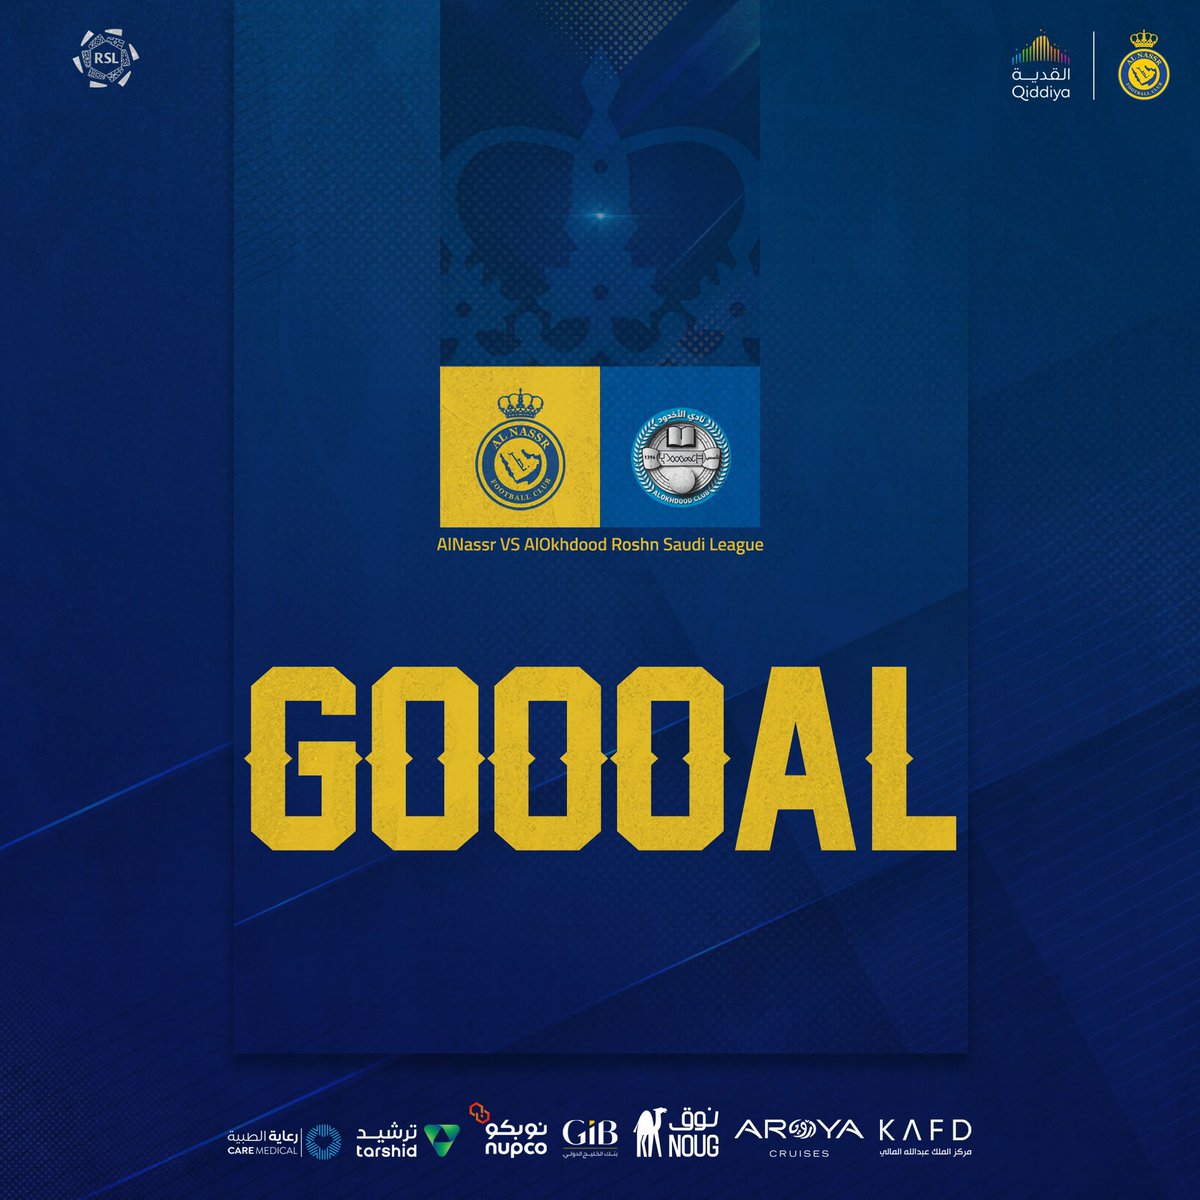 ⚽️ || GOOOOOAAAAL! 🤩 Brozović scores the first goal 7’ for @AlNassrFC #AlNassr 1:0 #AlOkhdood